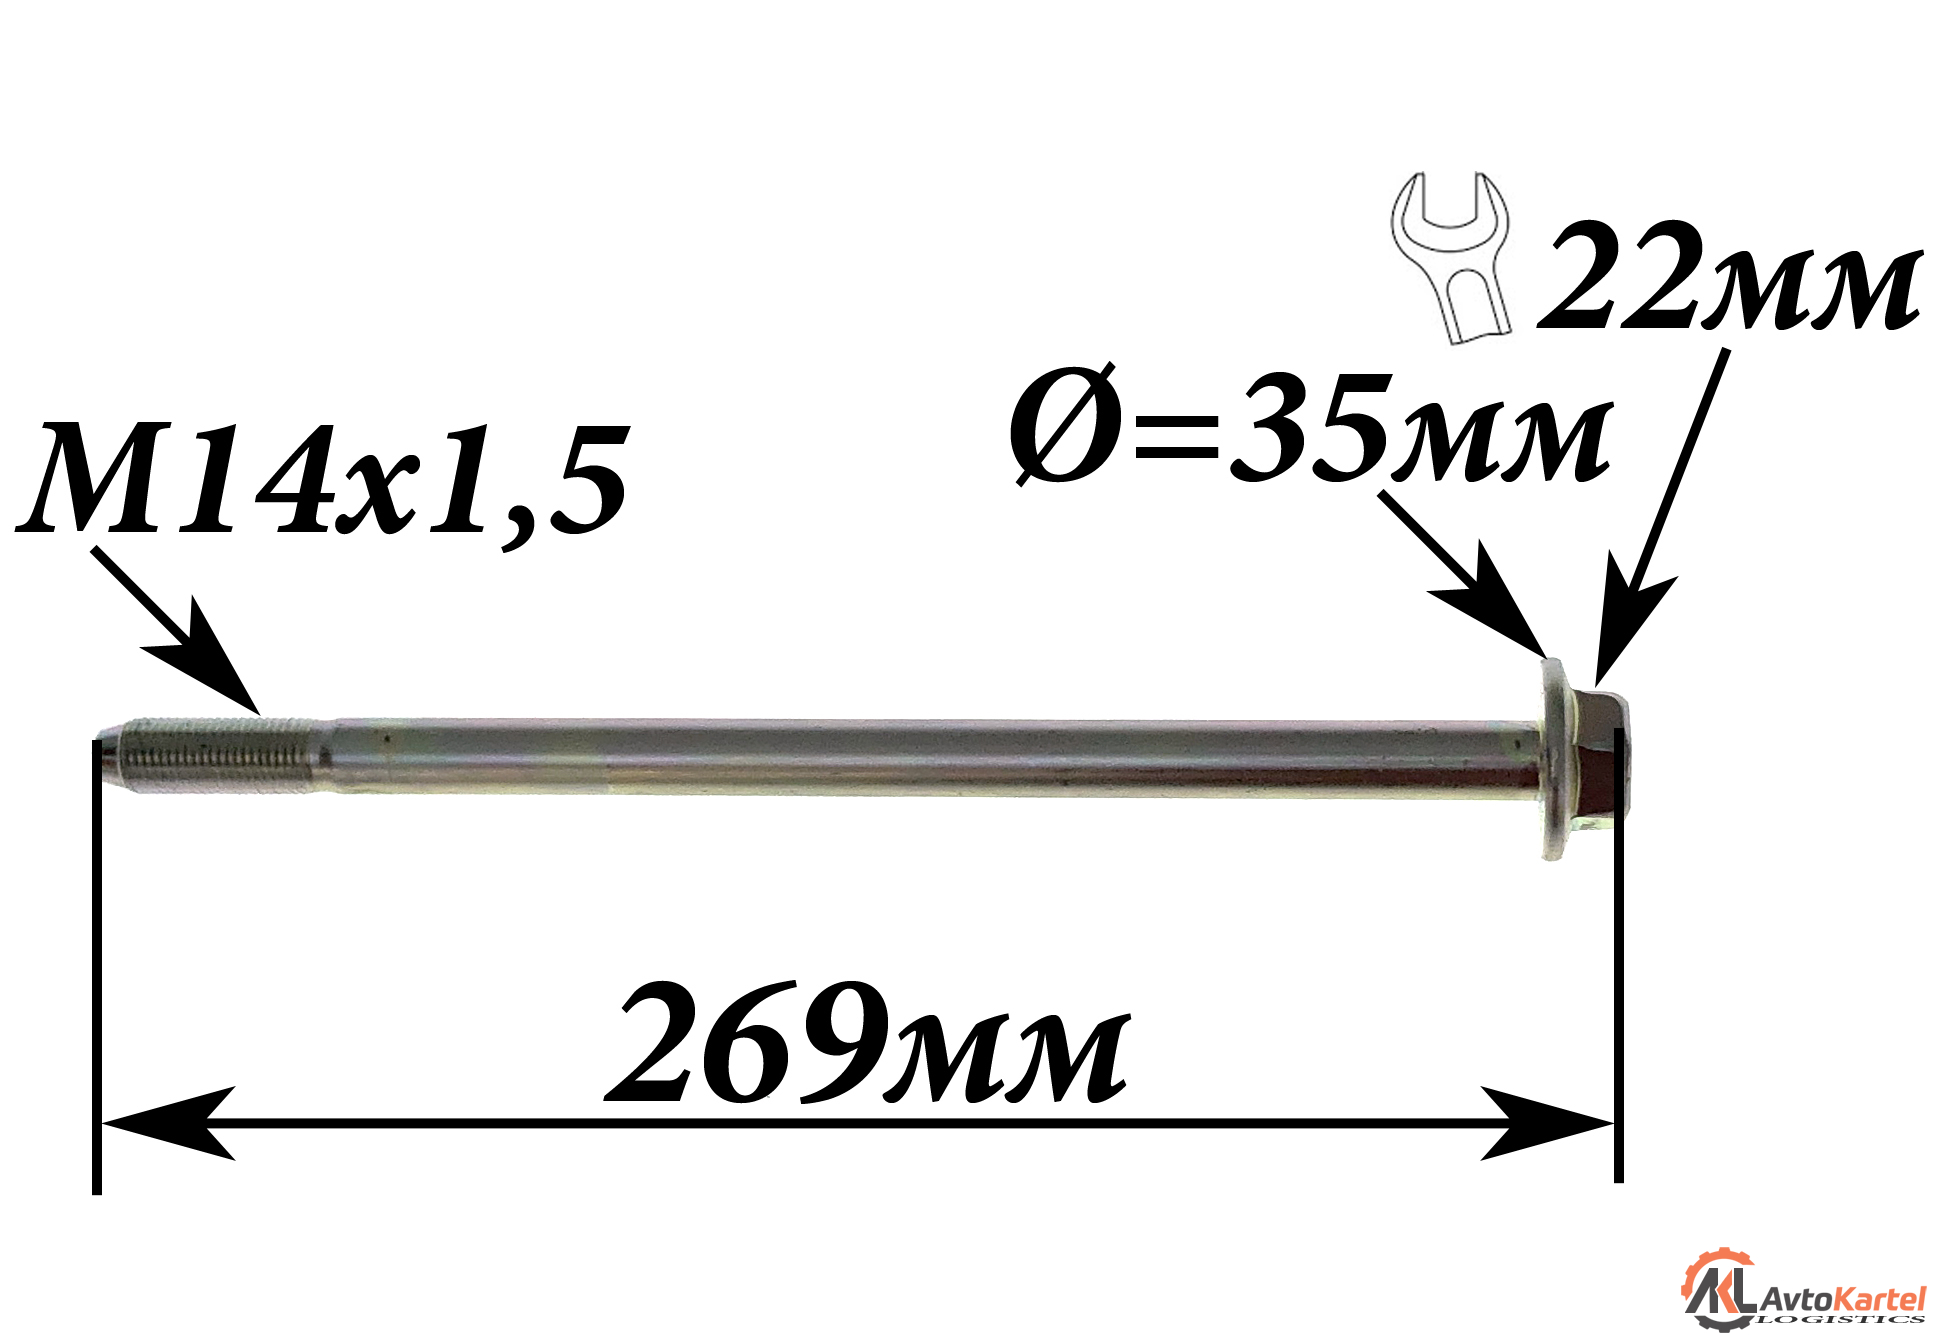 Болт крепления поперечных тяг длина 269мм, резьба M14X1,5мм